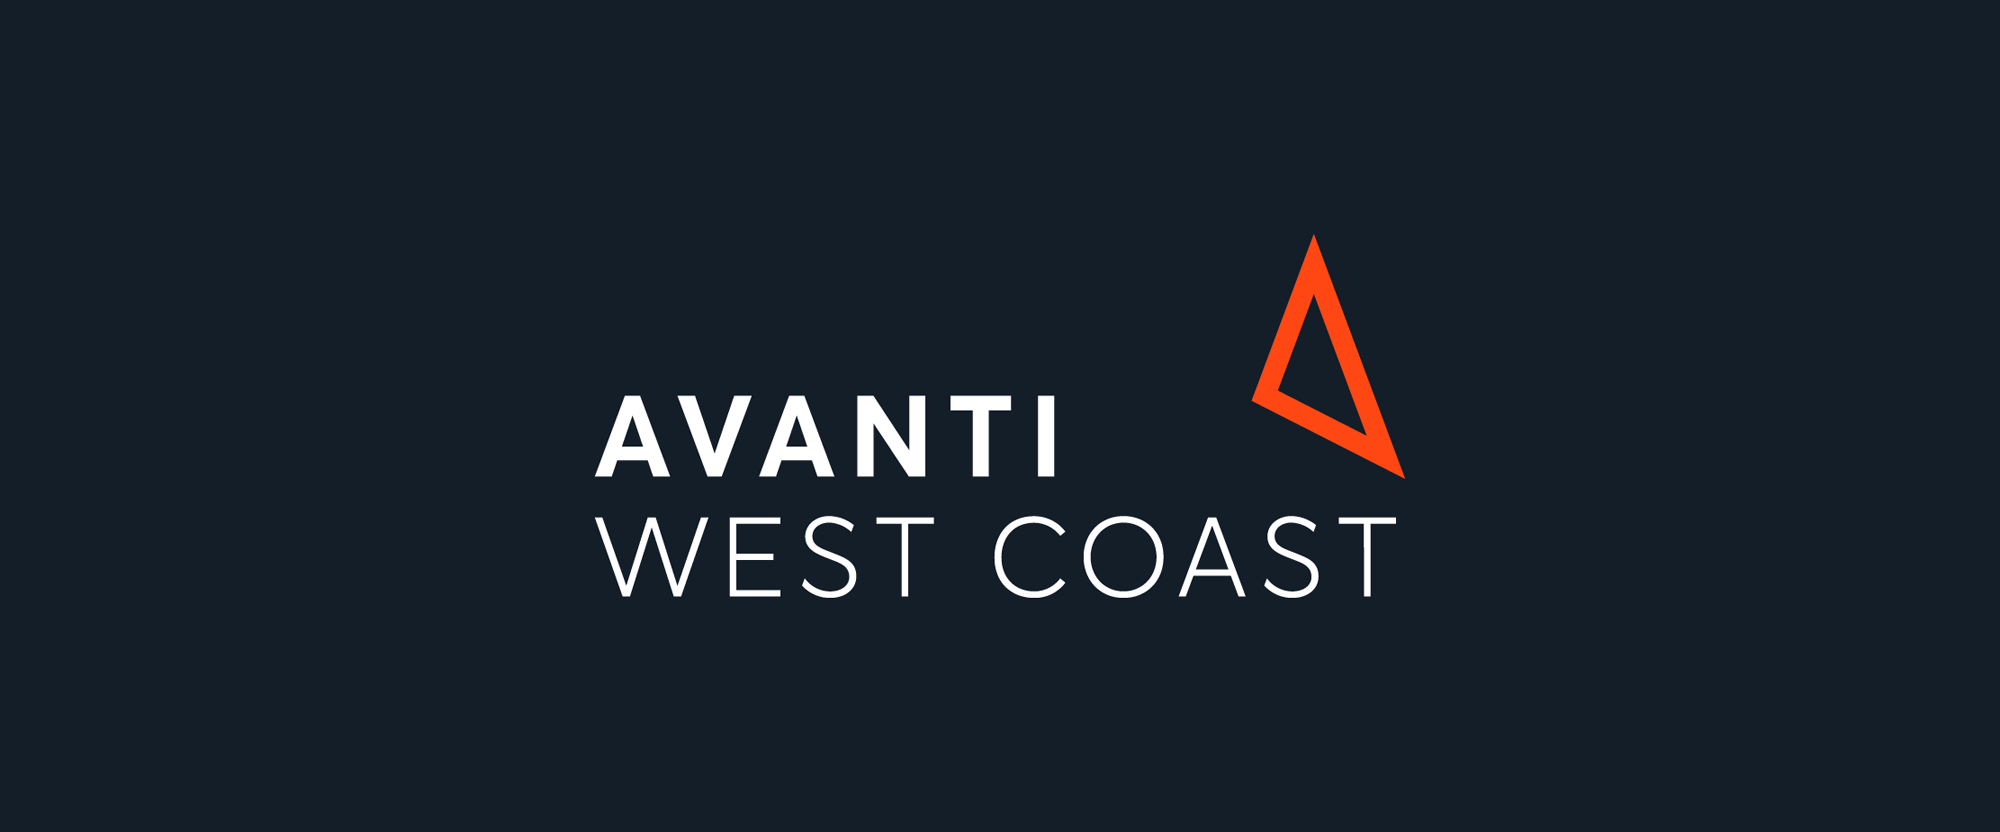 New Logo for Avanti West Coast